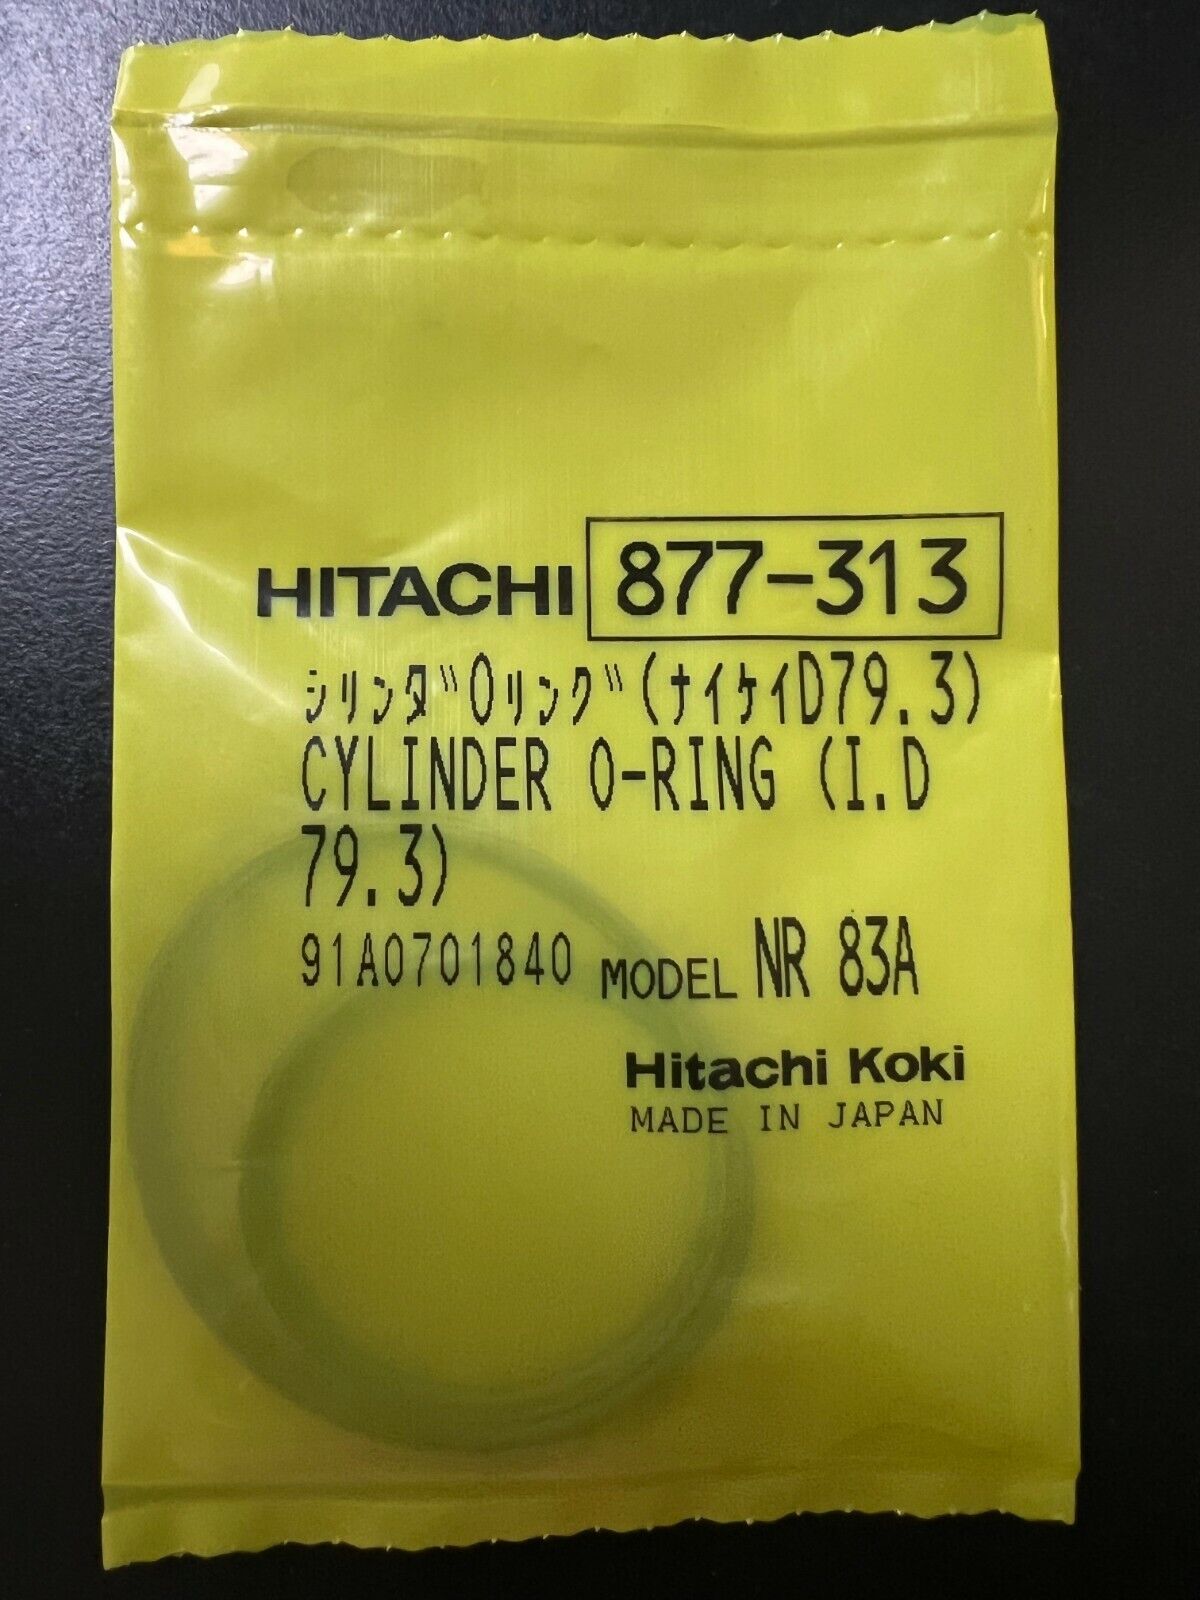 Genuine Hitachi Cylinder O-Ring 877-313 Shi Brand - Boston Mall Max 49% OFF New Free